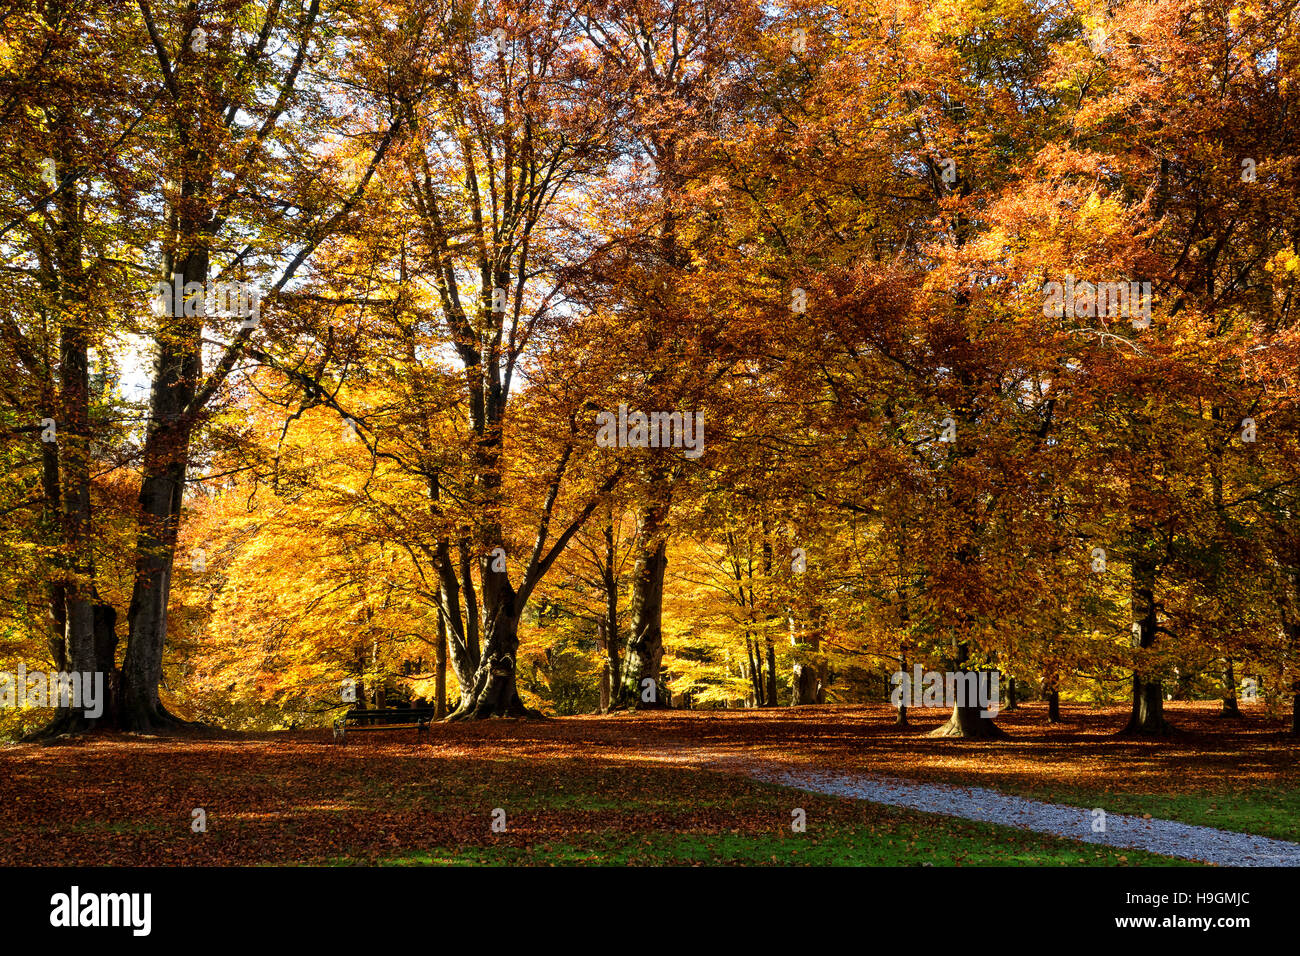 autumn season scenic in a park Stock Photo